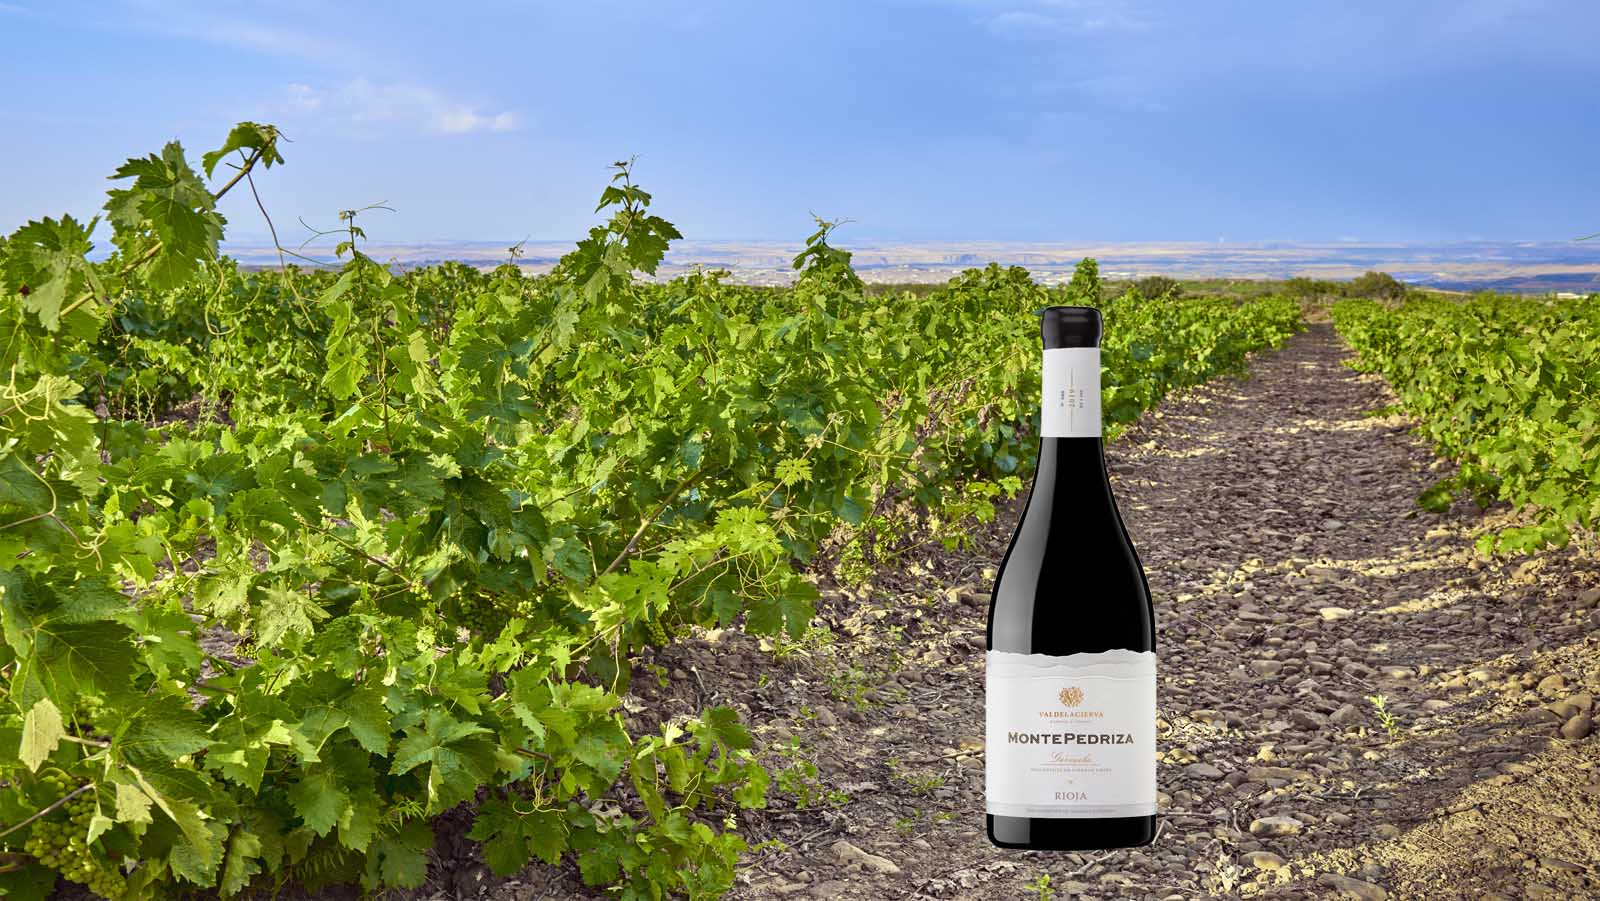 Montepedriza 2019, new wine